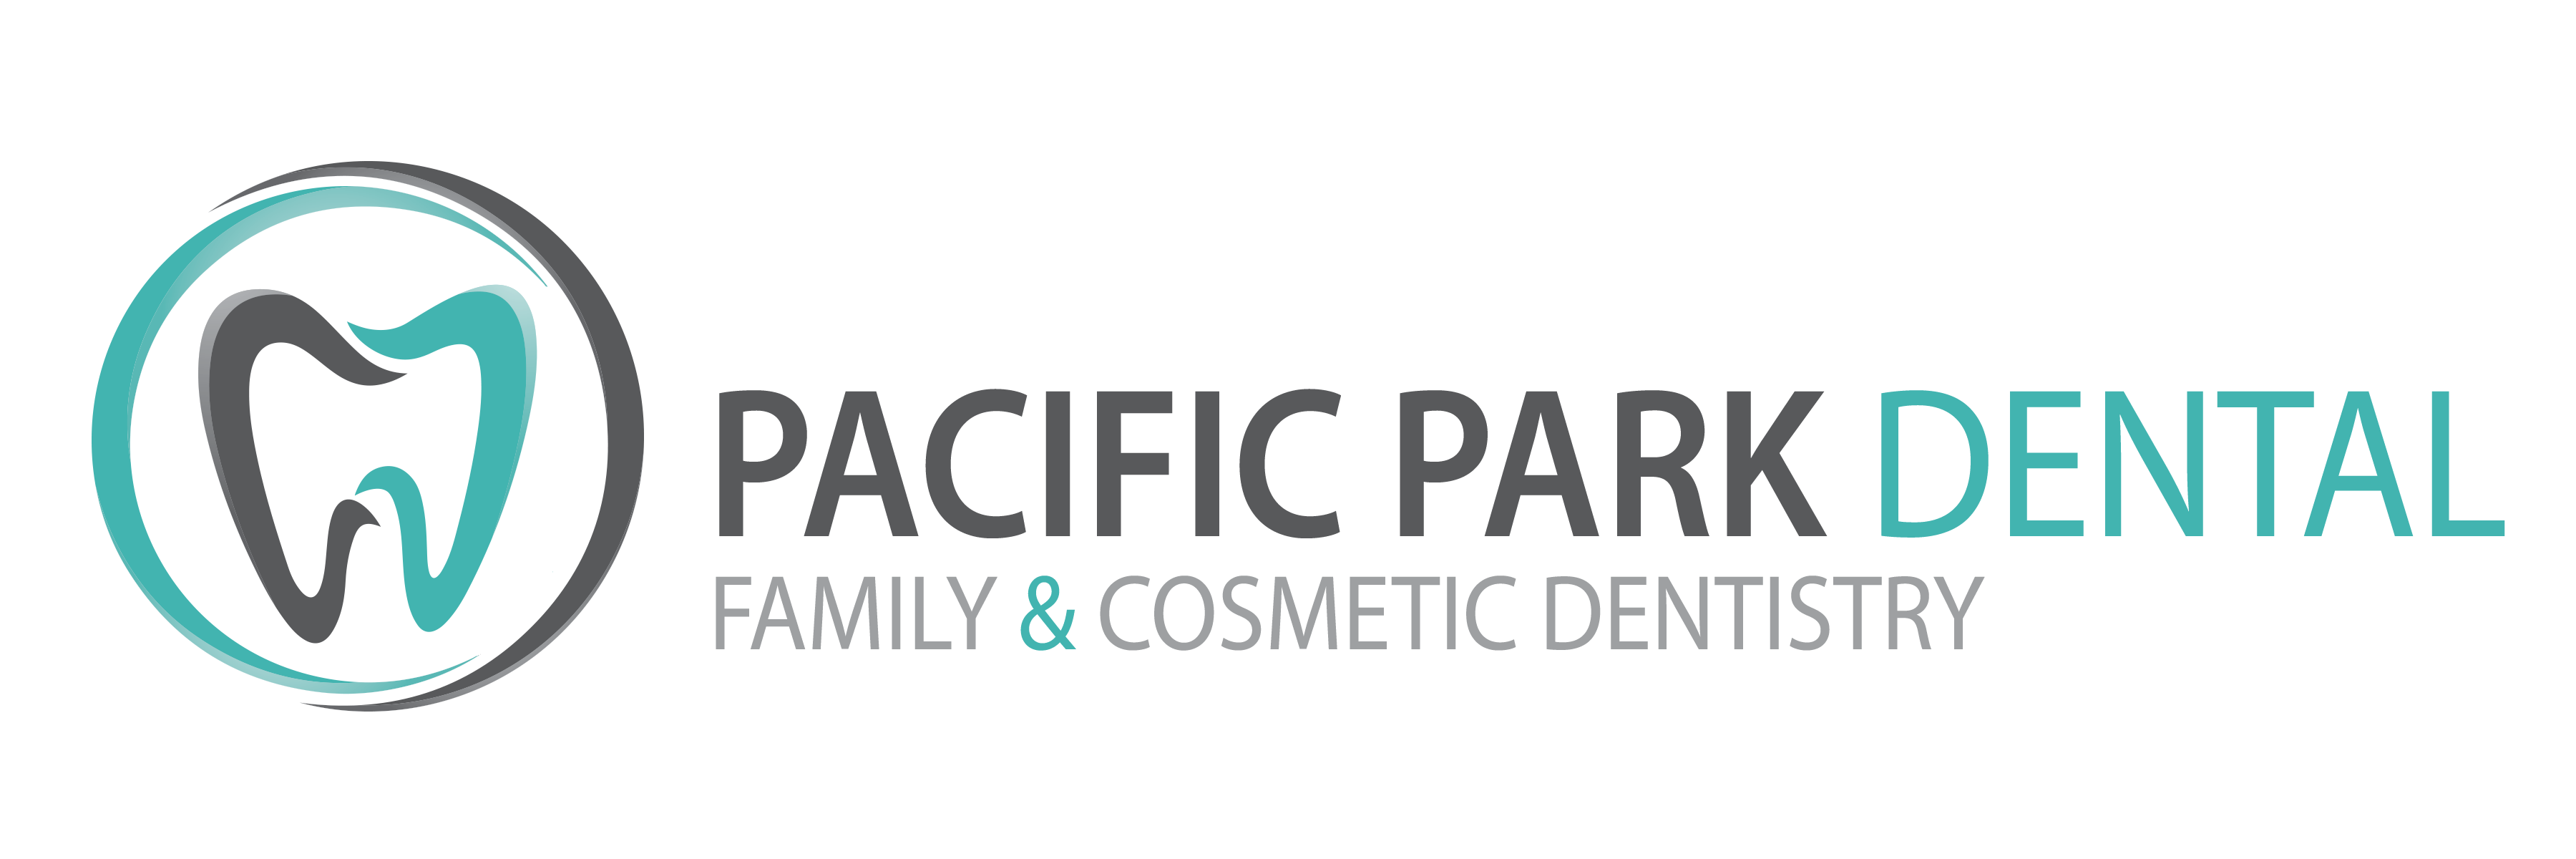 Pacific Park Dental Logo